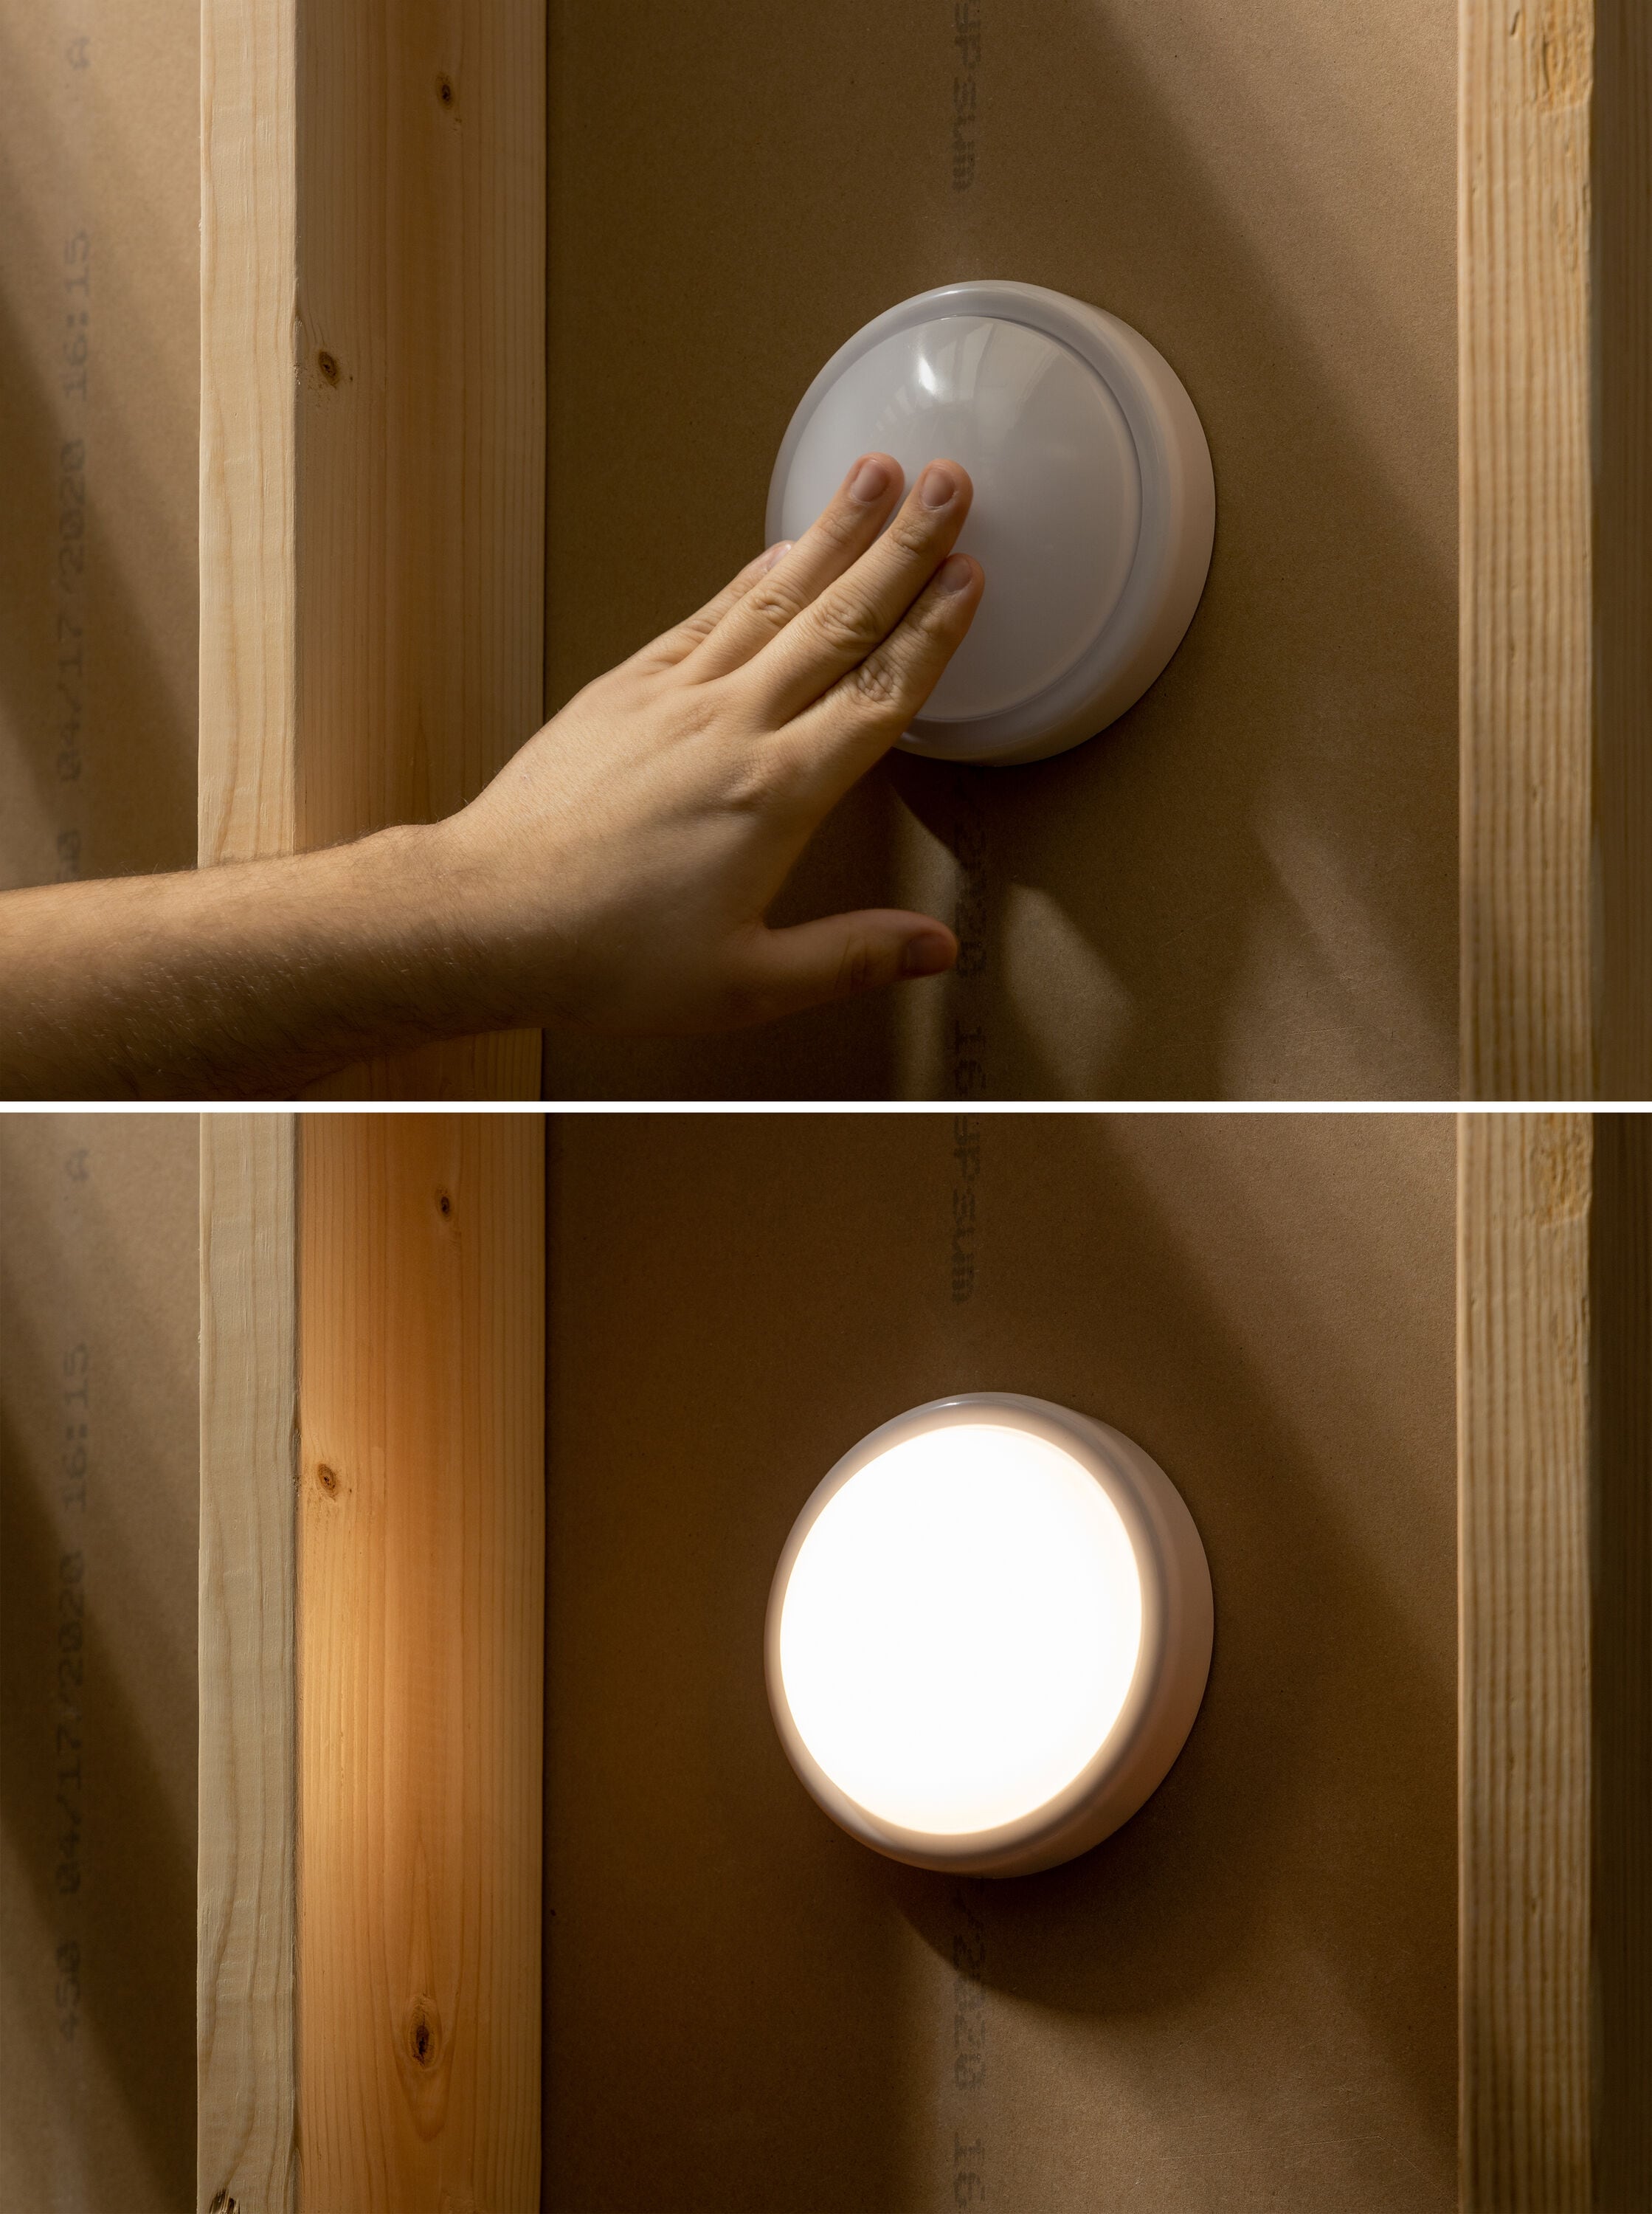 2019 Lighting Toilet Light Led Night Light Human Motion Sensor